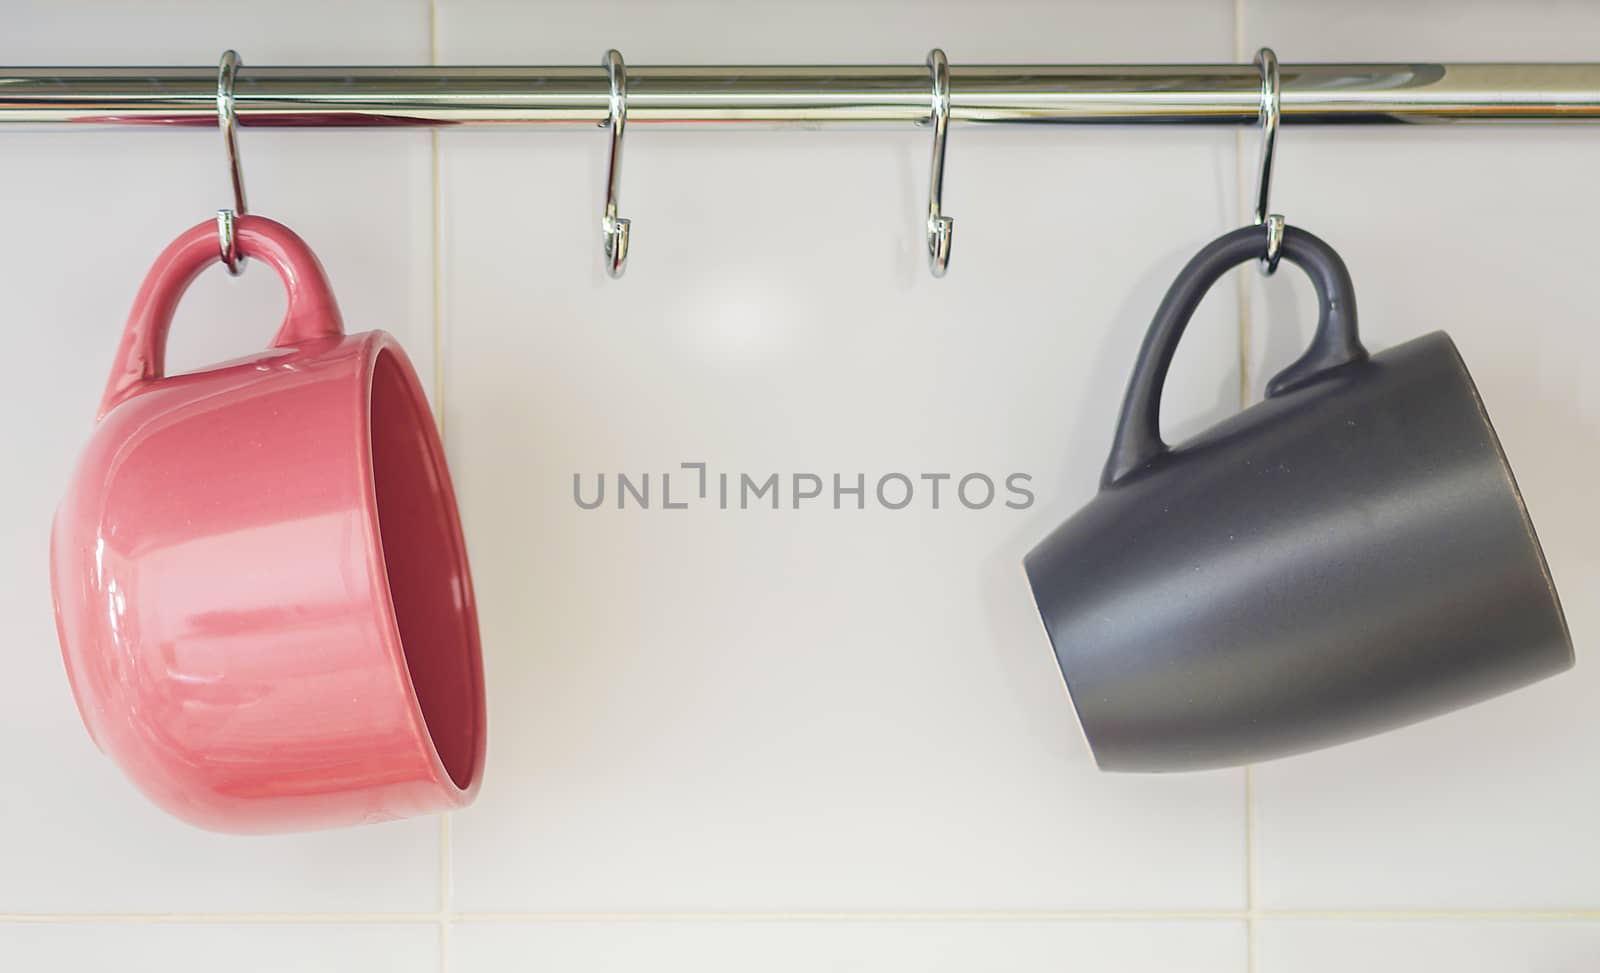 Two hanging mugs by rarrarorro